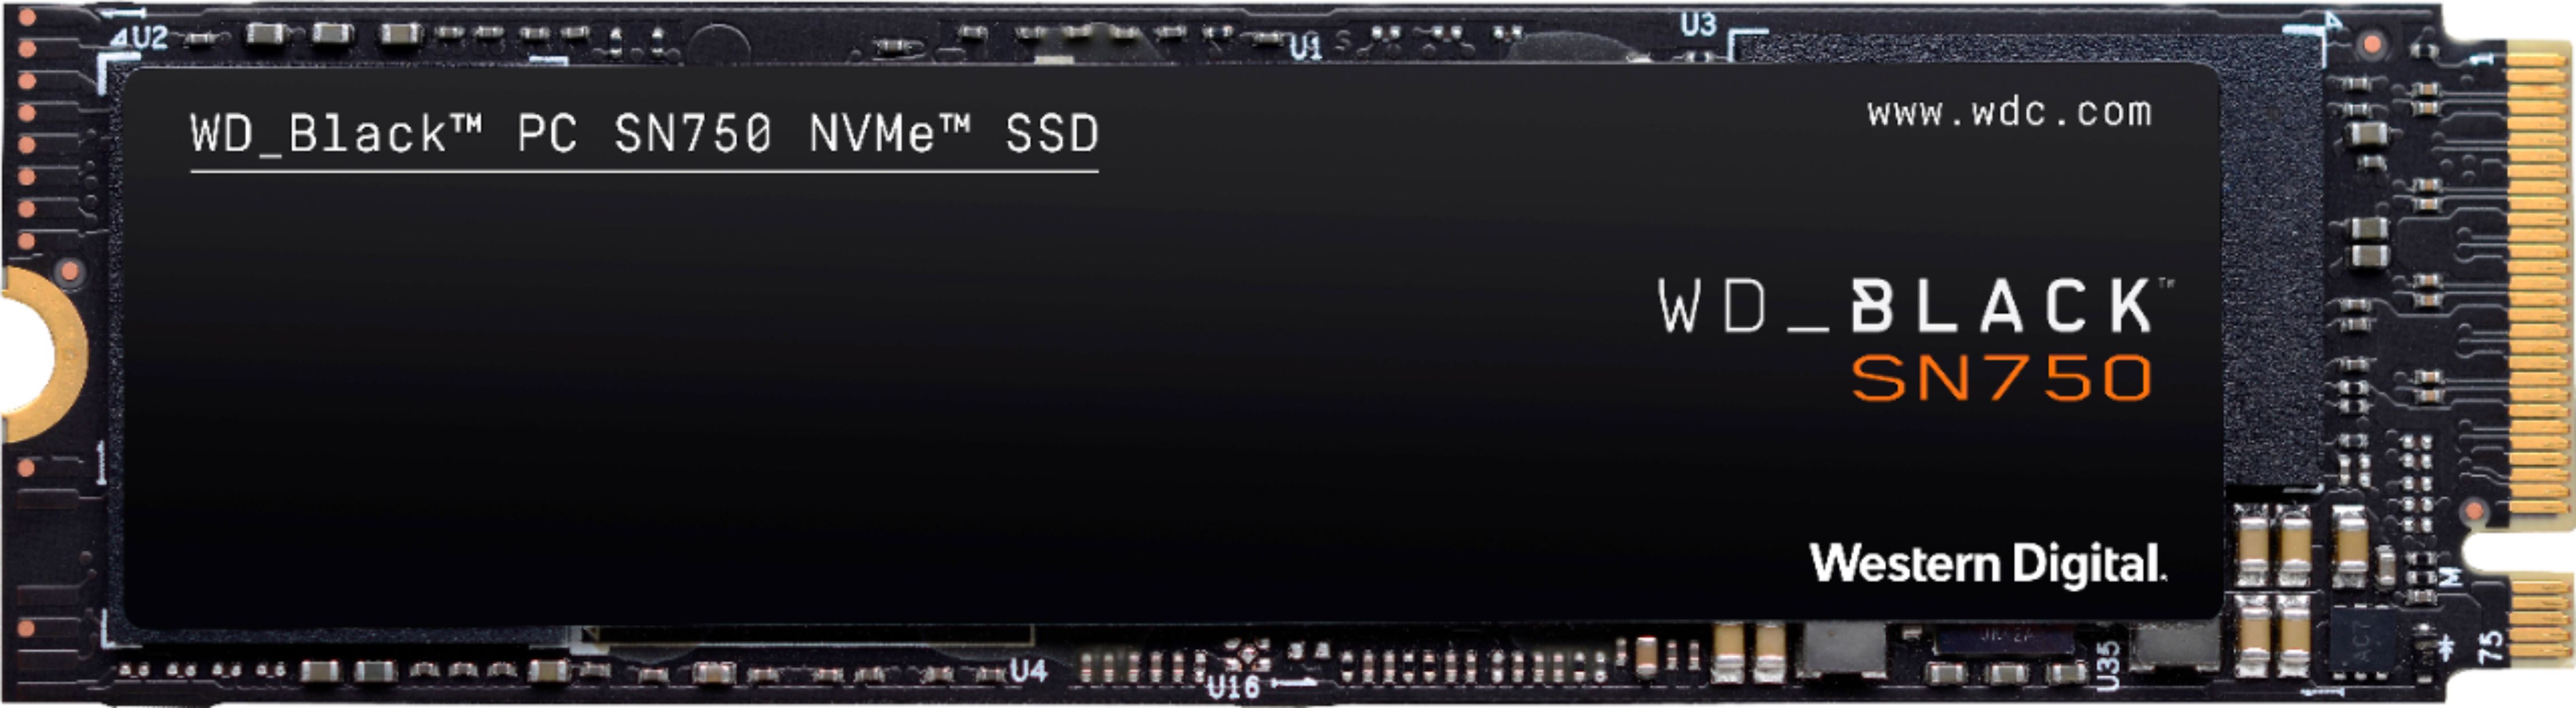 Wd Wd Black Sn750 Nvme 4tb Internal Pci Express 3 0 X4 Solid State Drive For Laptops Desktops Wdbrpg0040bnc Wrsn Best Buy